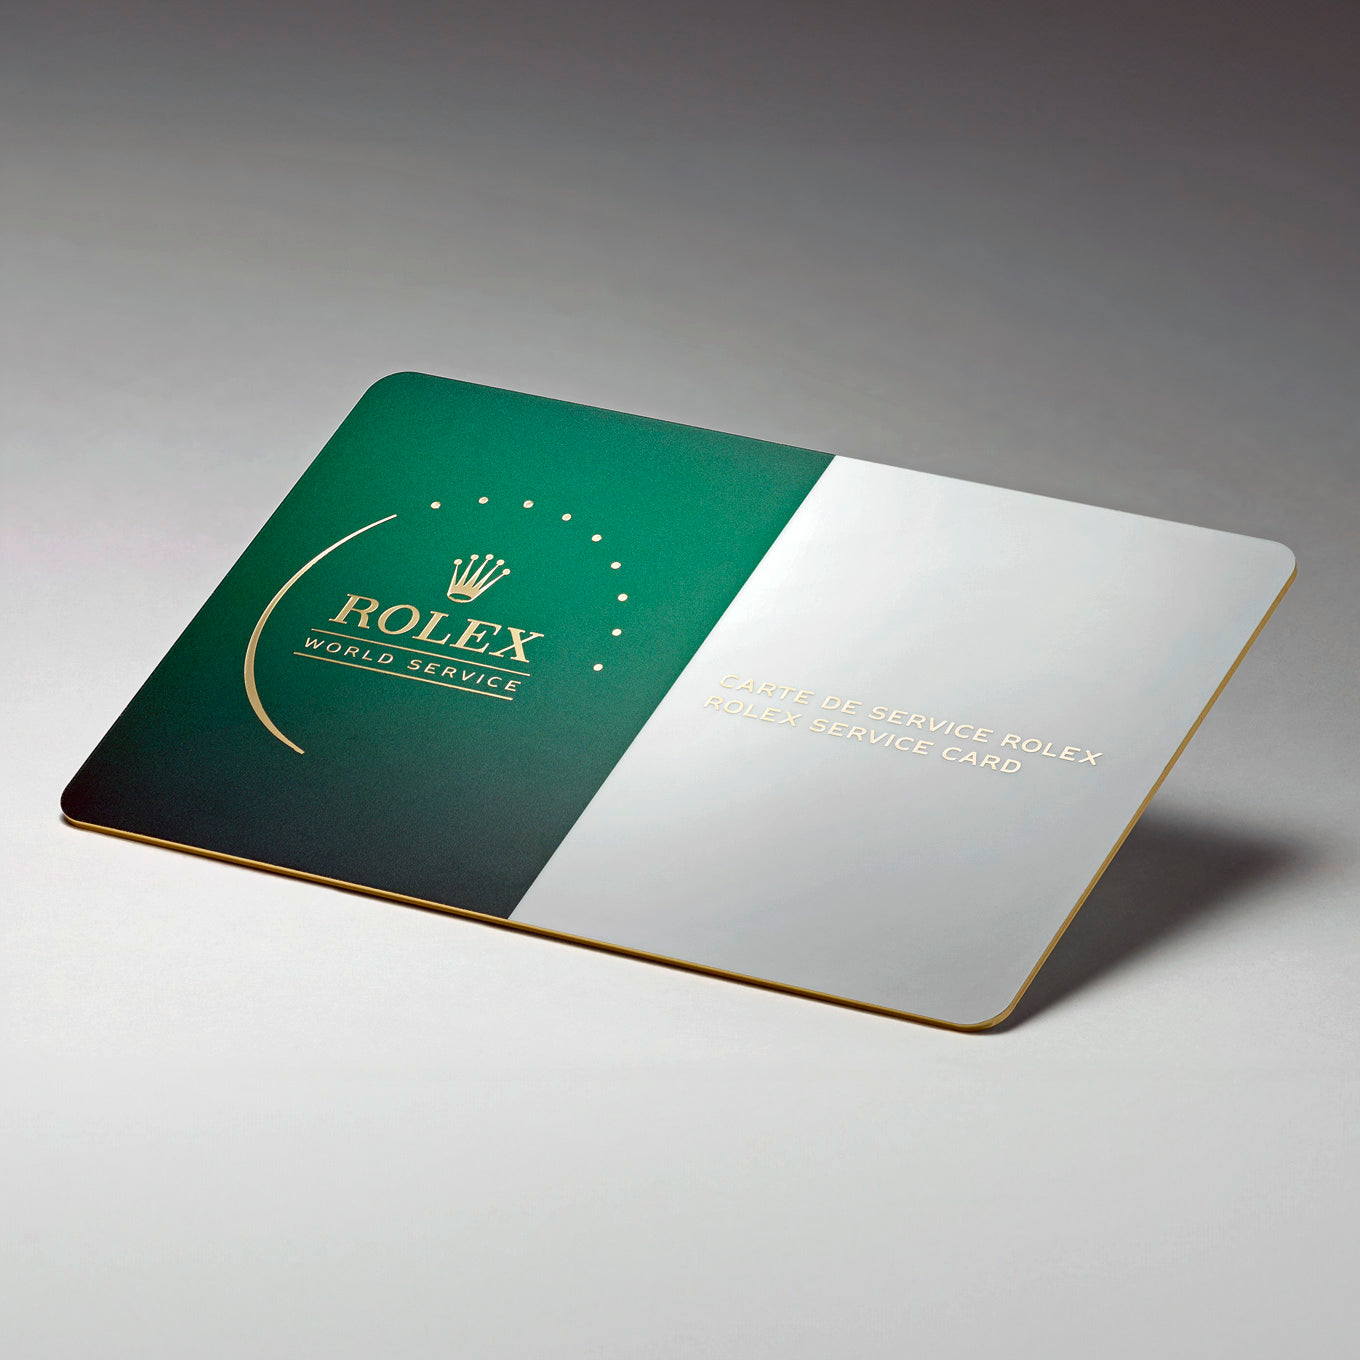 Rolex service guarantee card